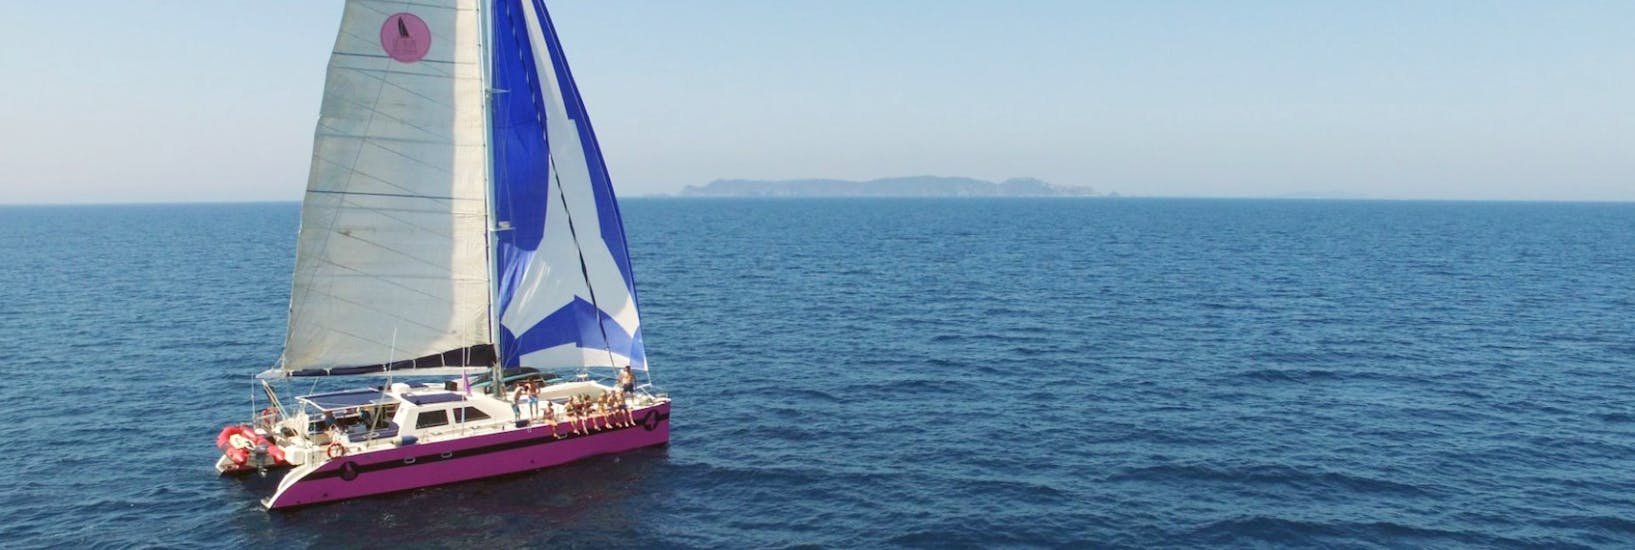 View during the Party Catamaran Trip in the Gulf of Saint-Tropez with Caseneuve Maxi Catamaran.